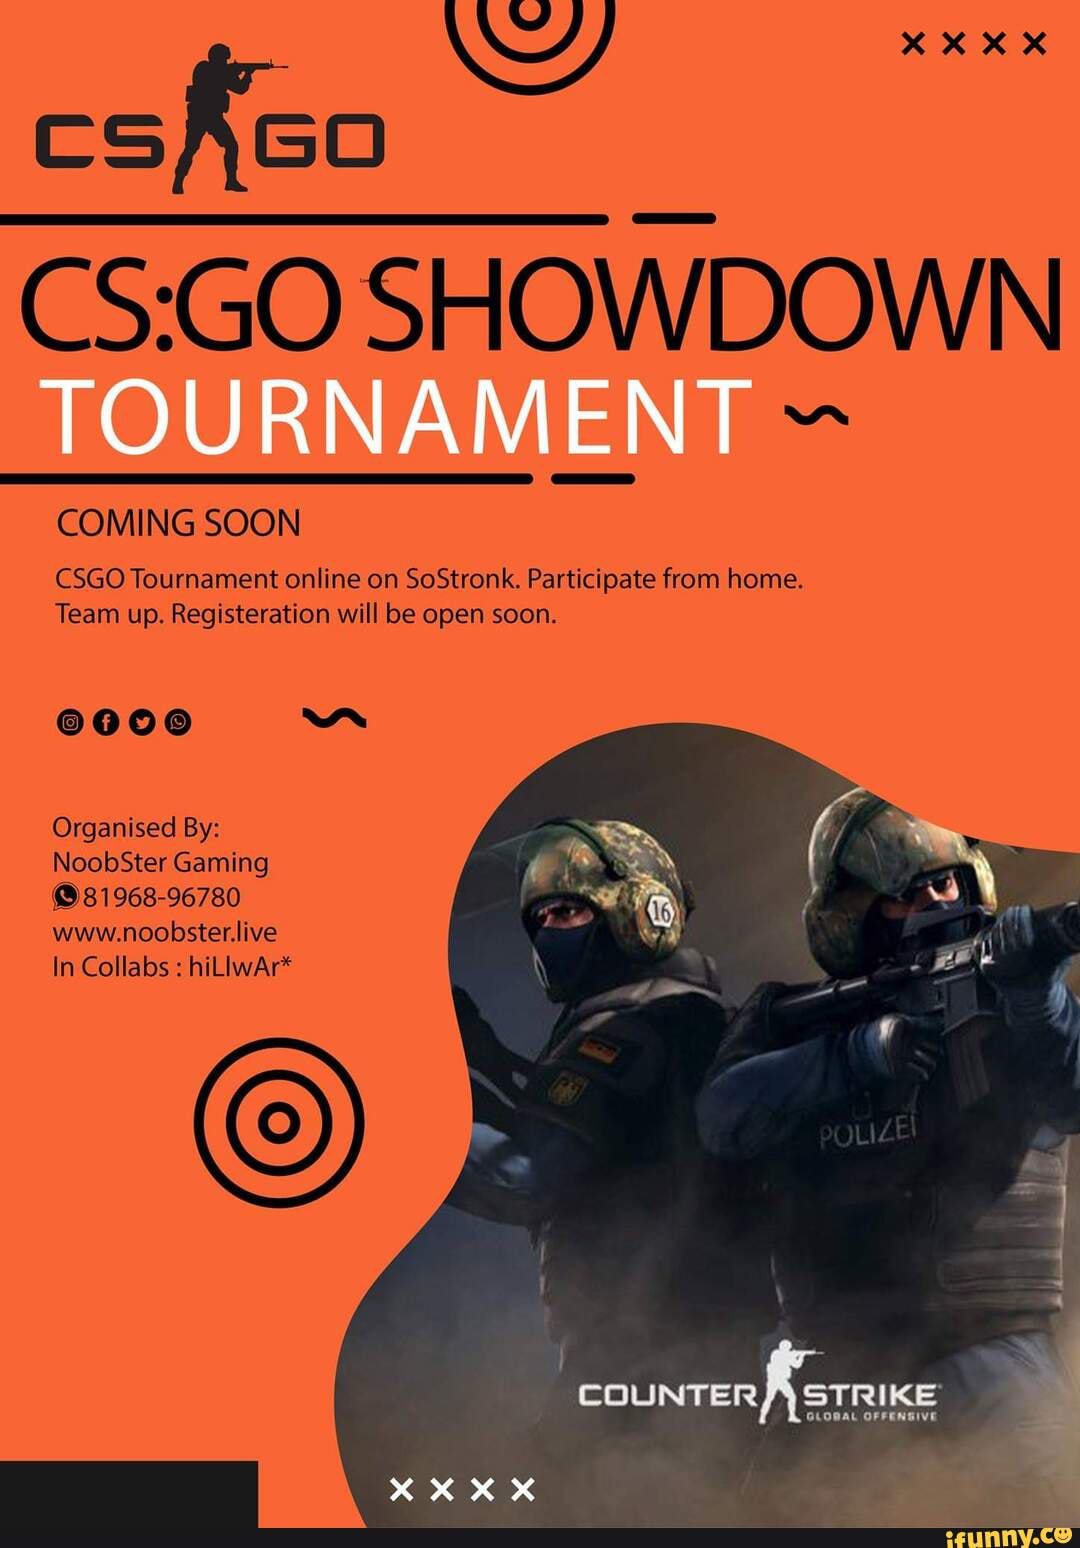 WY xxXxXX cshco SHOWDOWN COMING SOON CSGO Tournament online on SoStronk